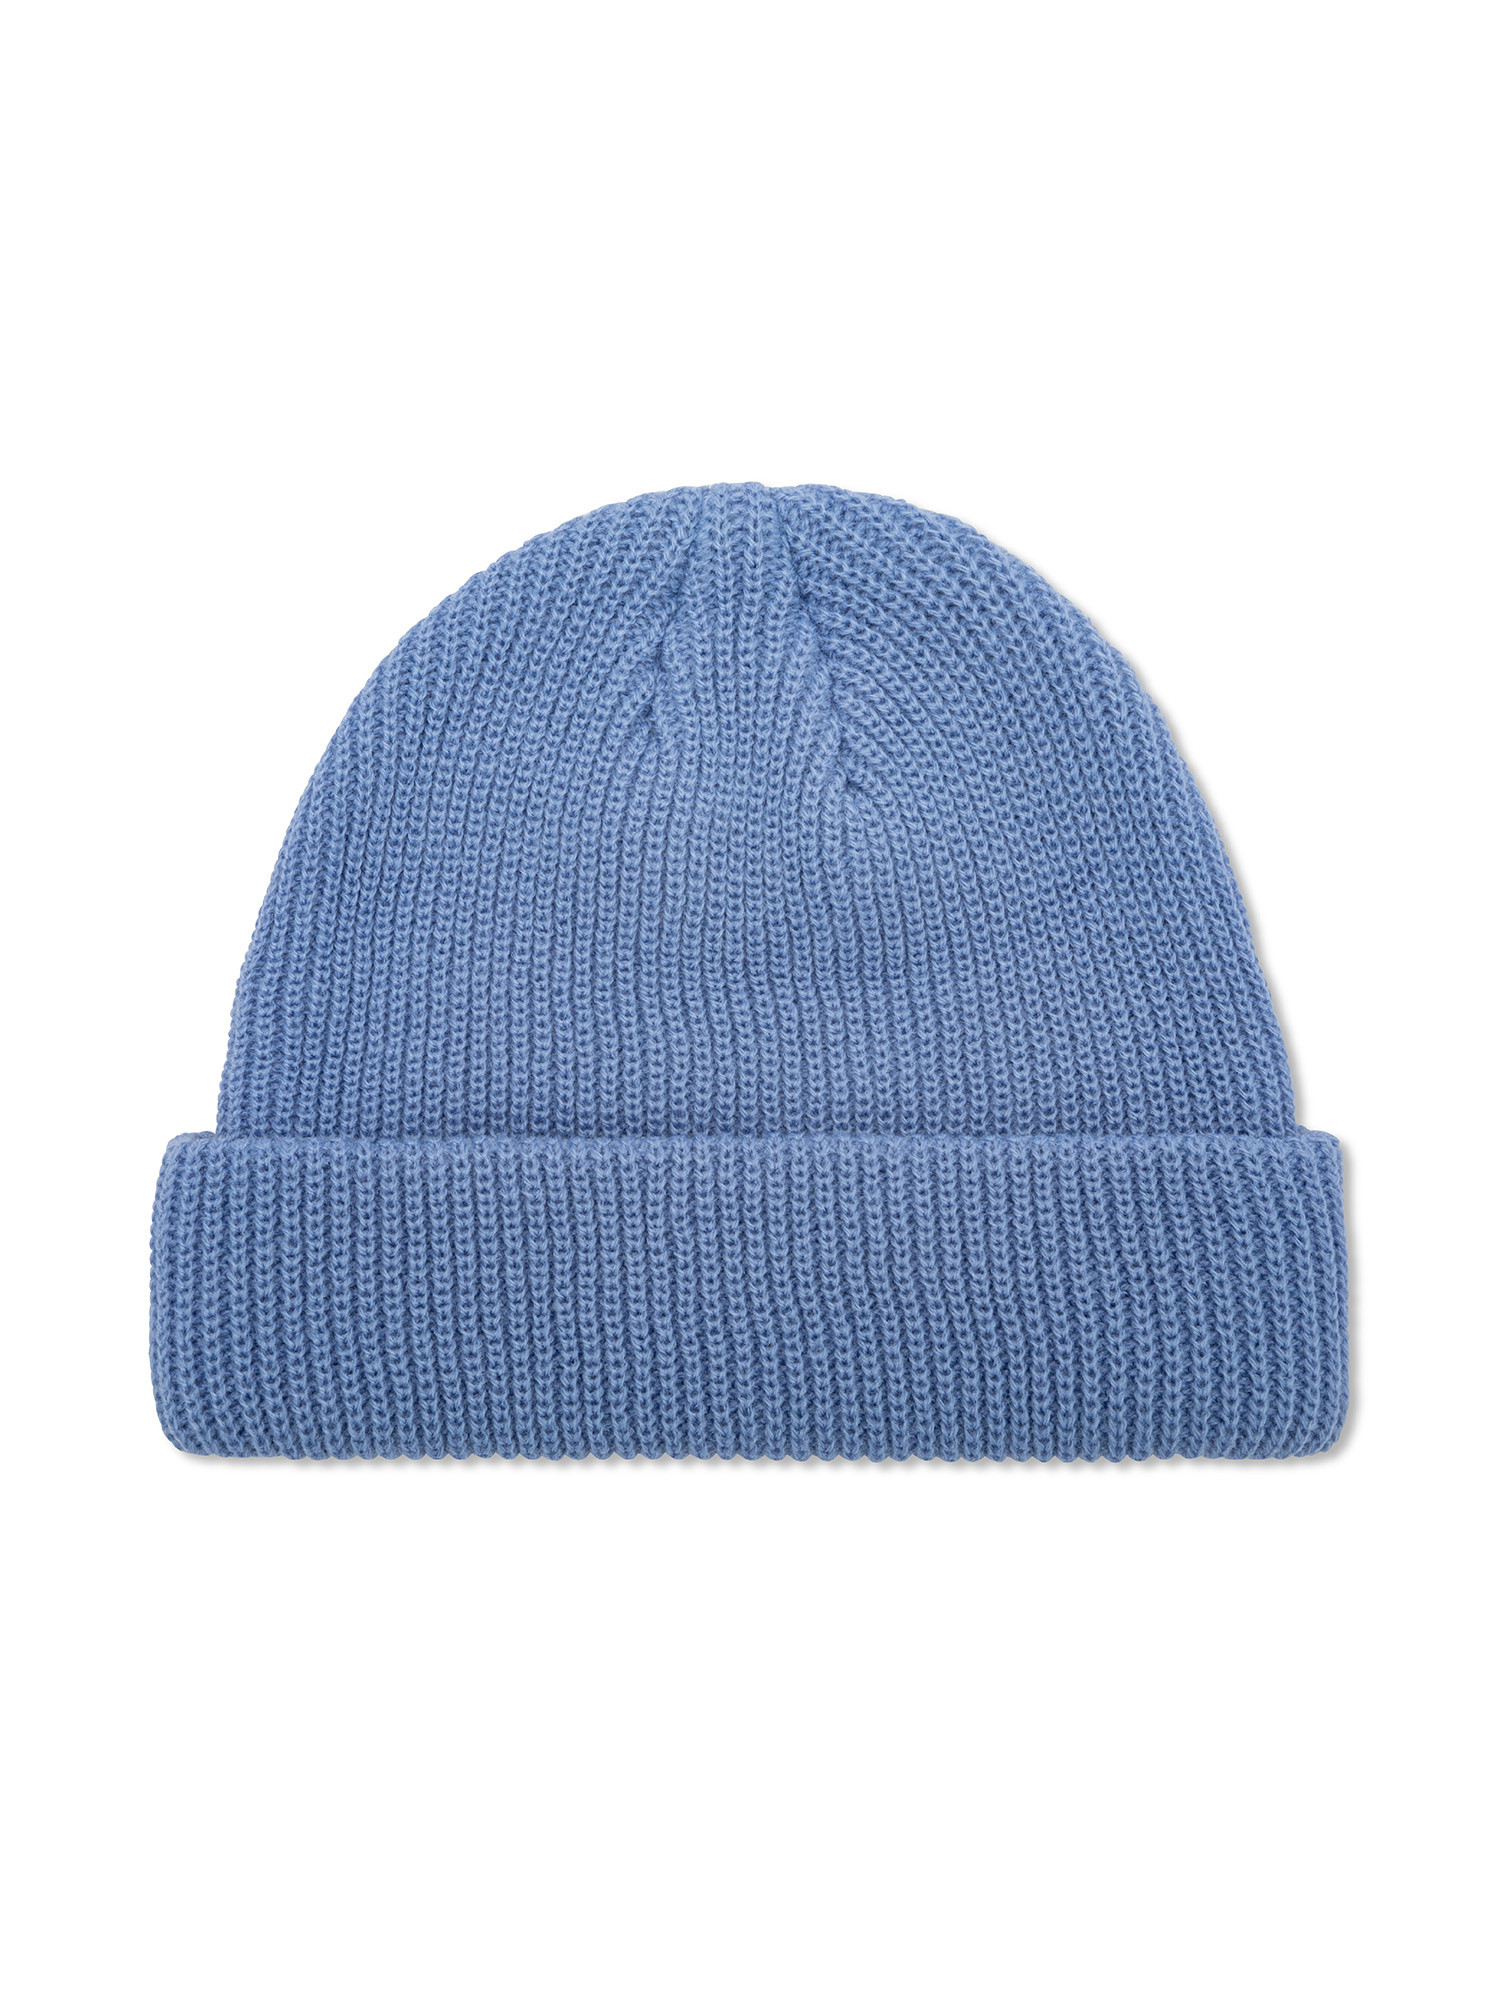 Koan - Ribbed cap, Light Blue, large image number 0